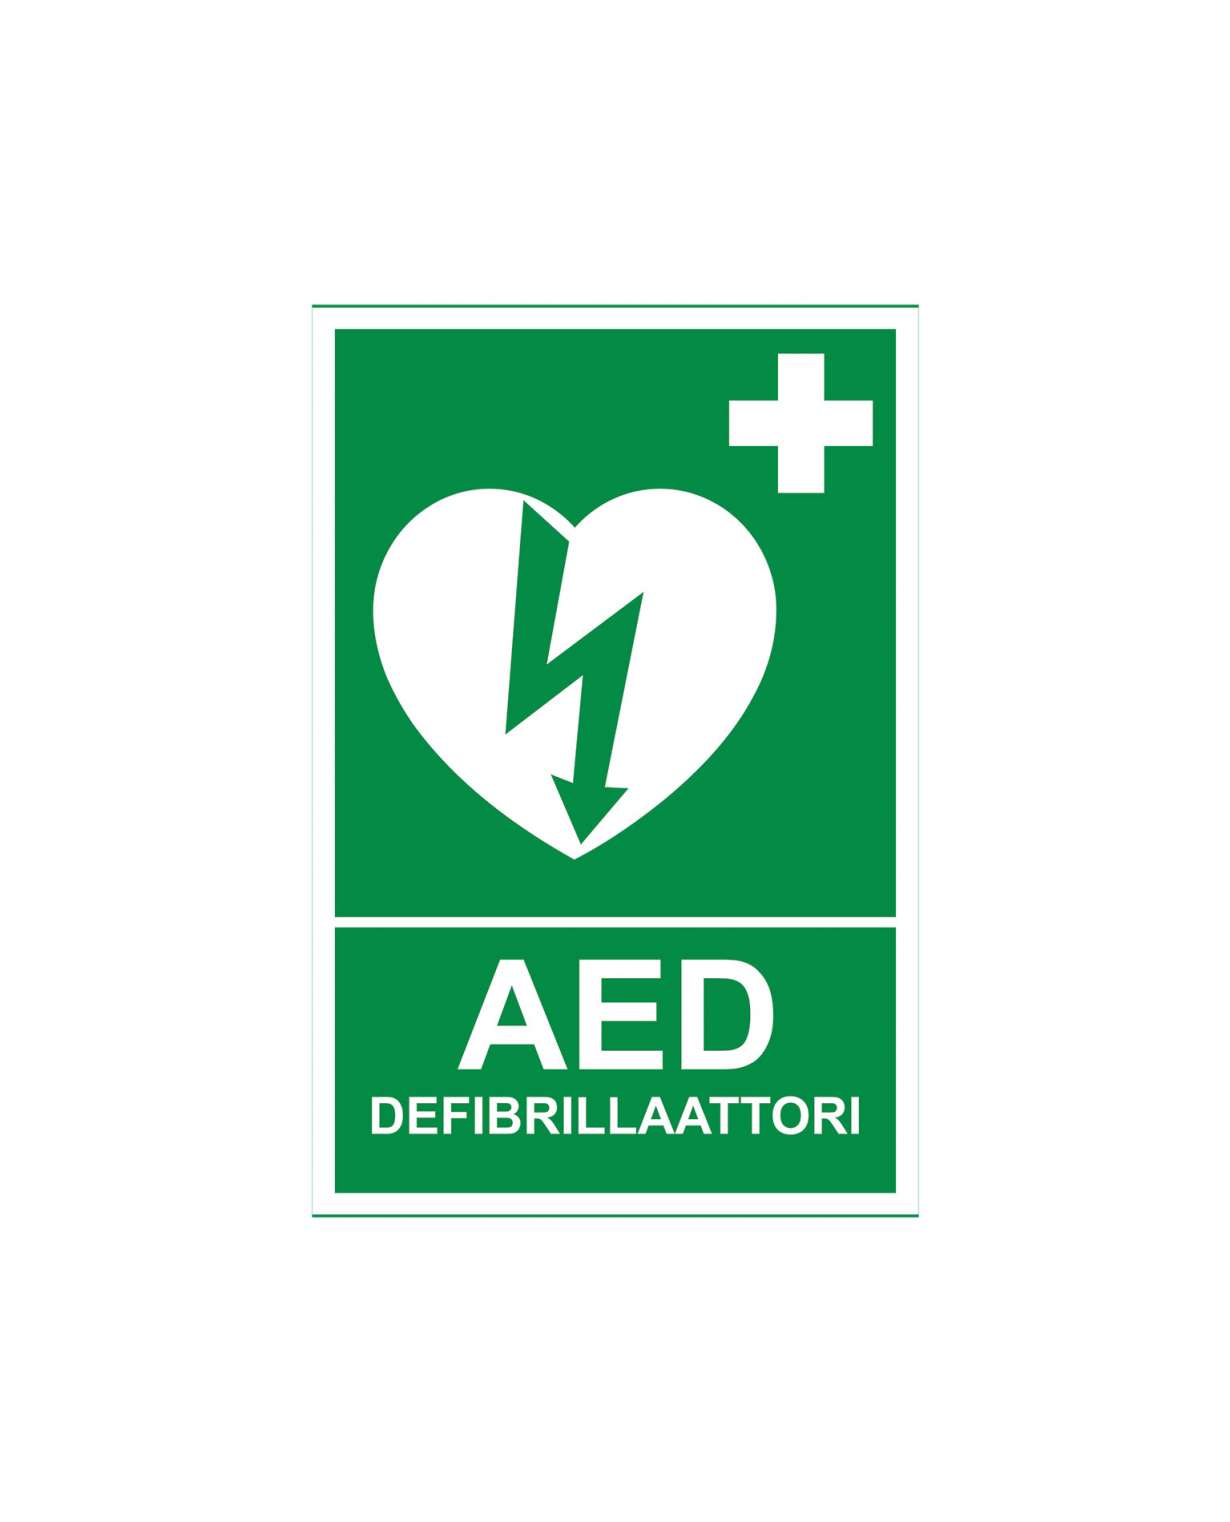 AED defibrillaattori, Magneetti jälkiheijastava, 300x400 mm